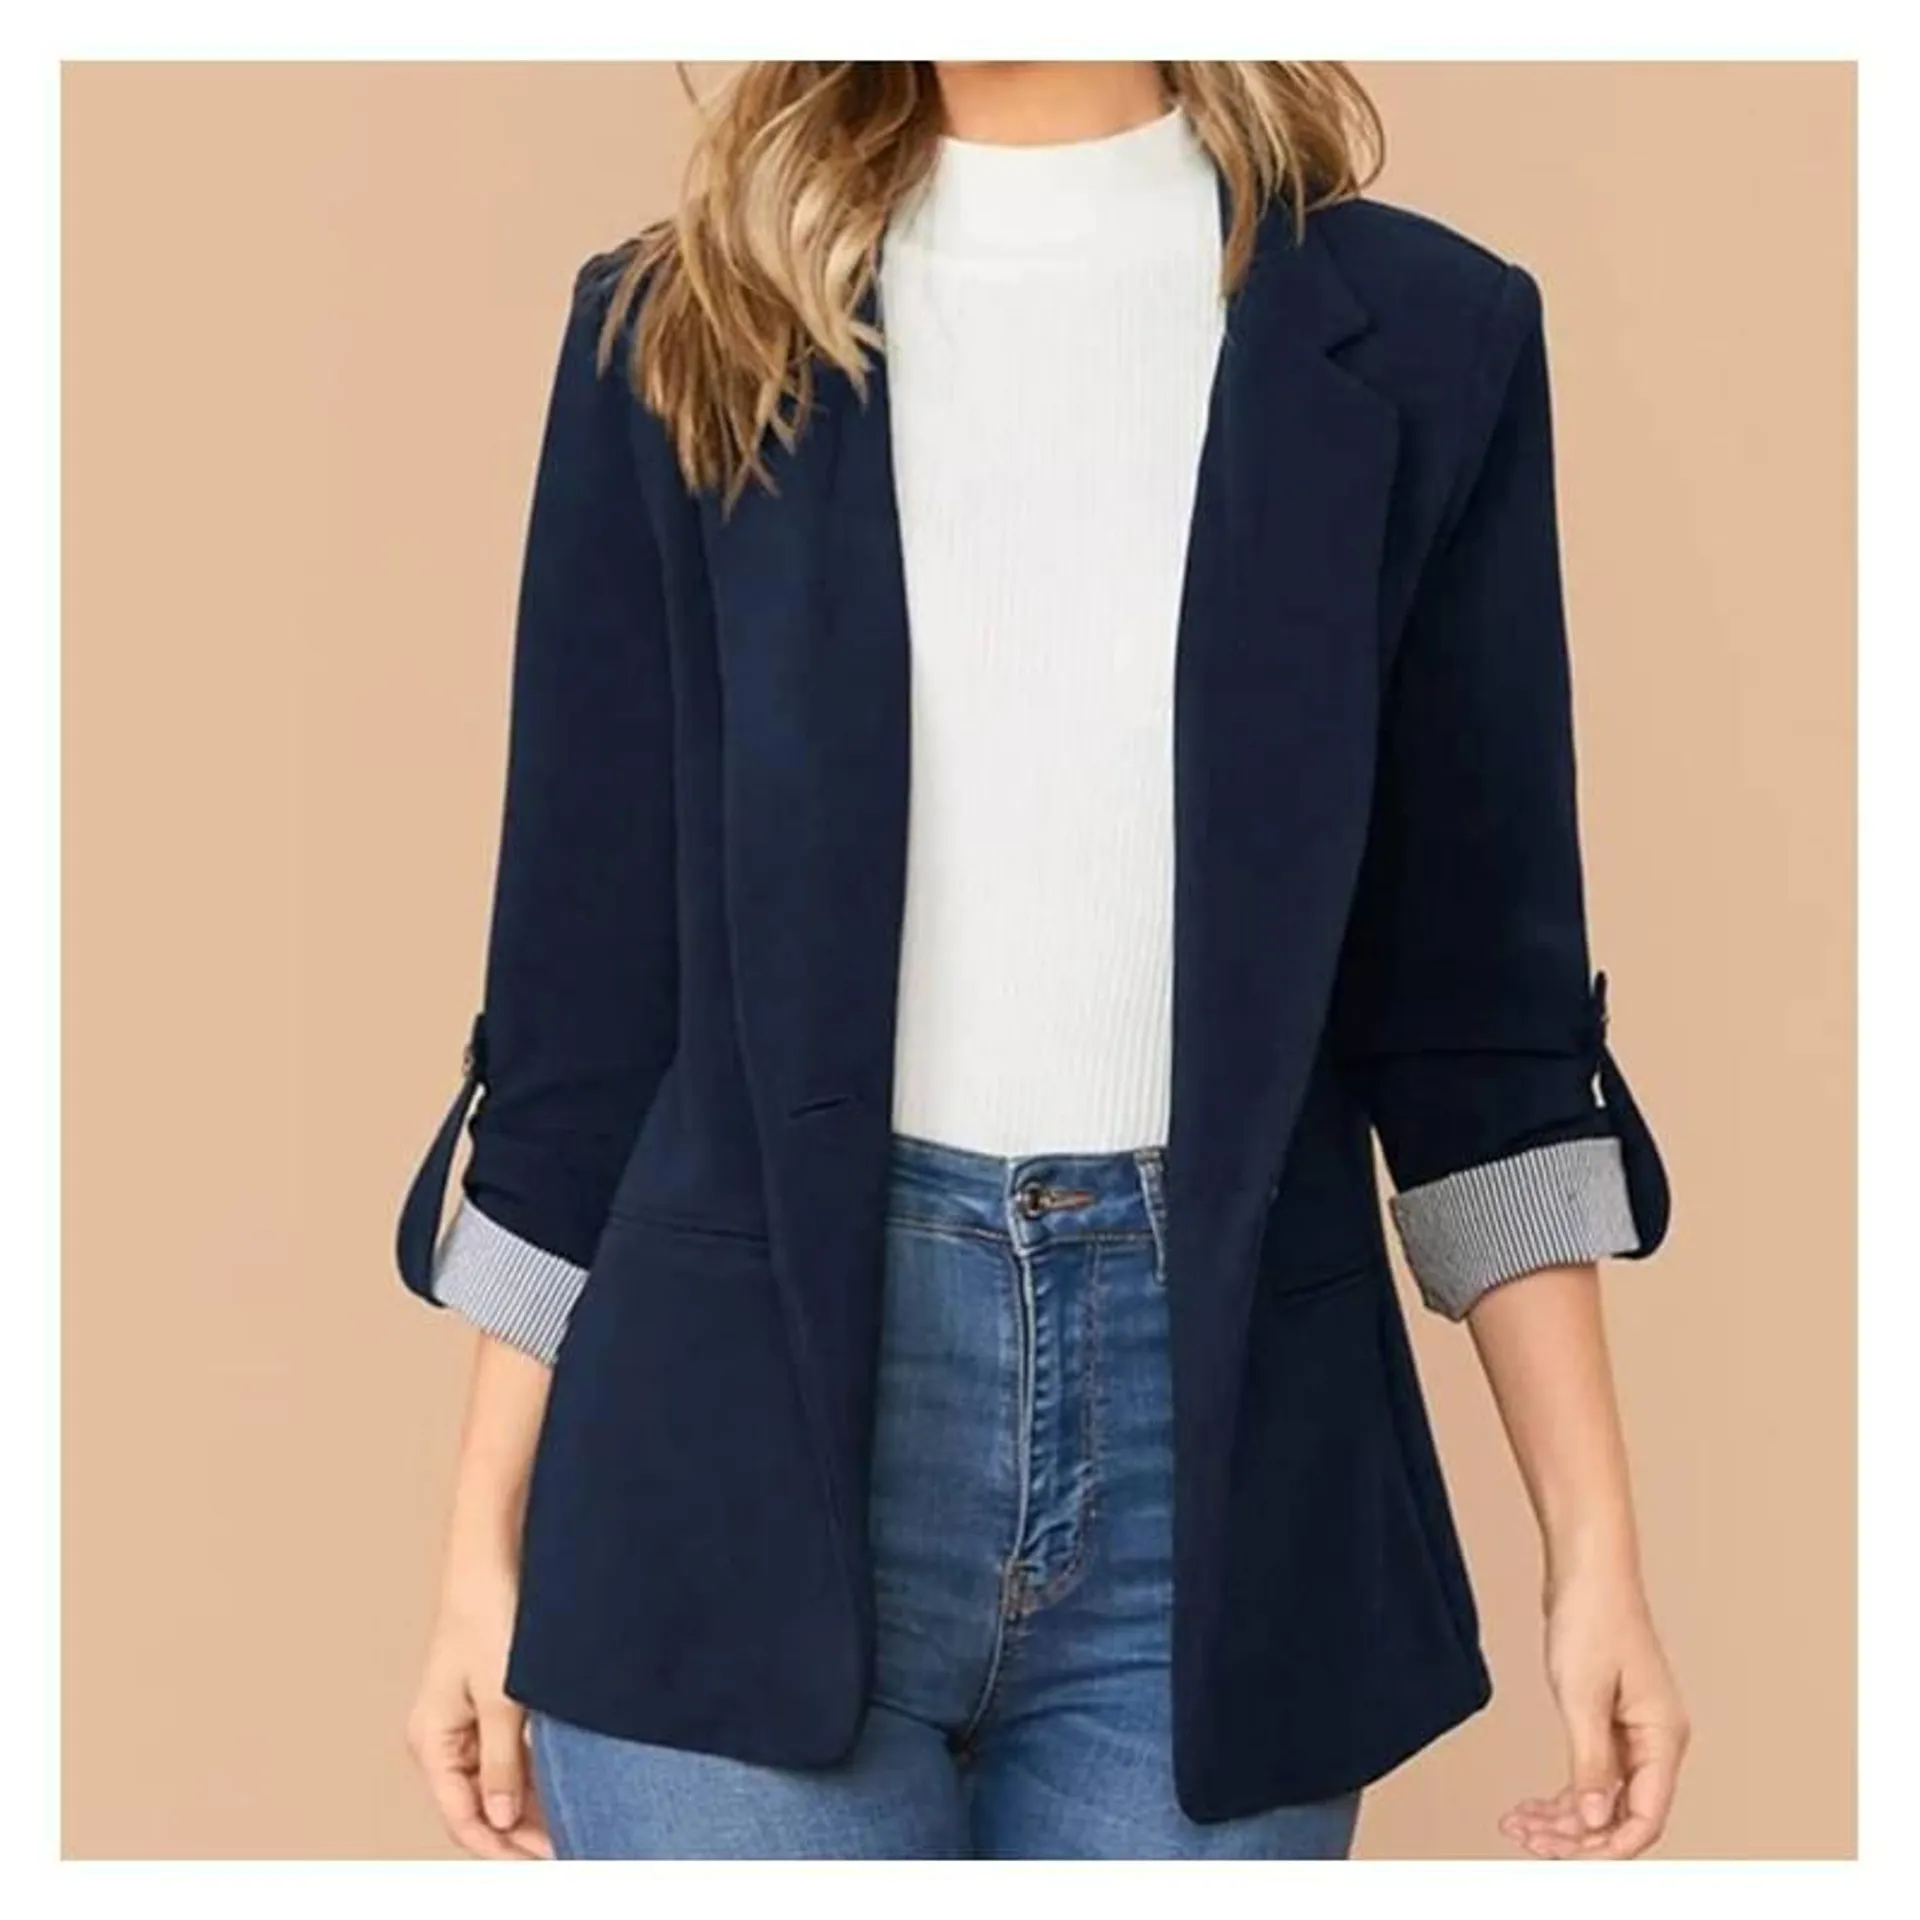 Chaqueta Blazer delgada abrigo casual para mujeres - Azul